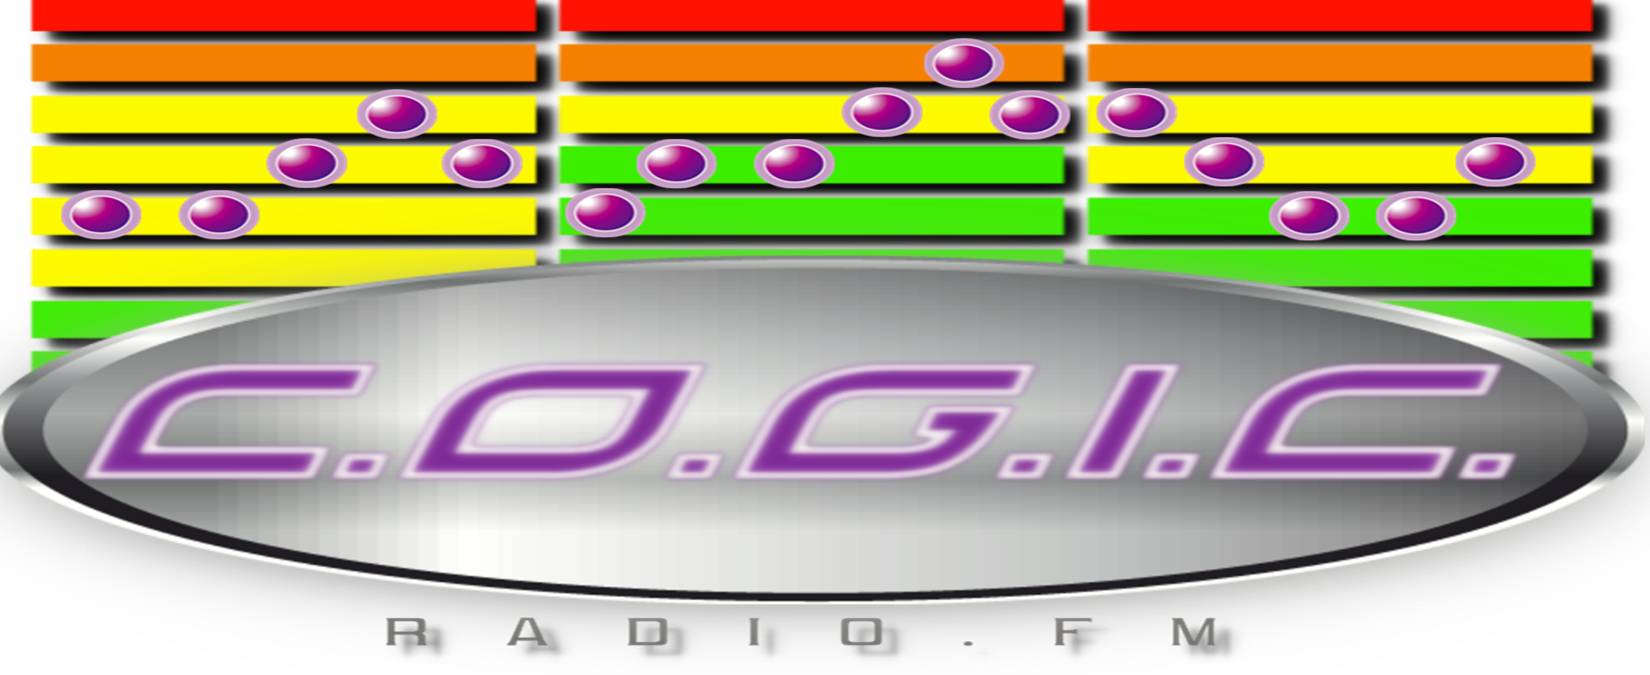 CogicRadio.fm logo